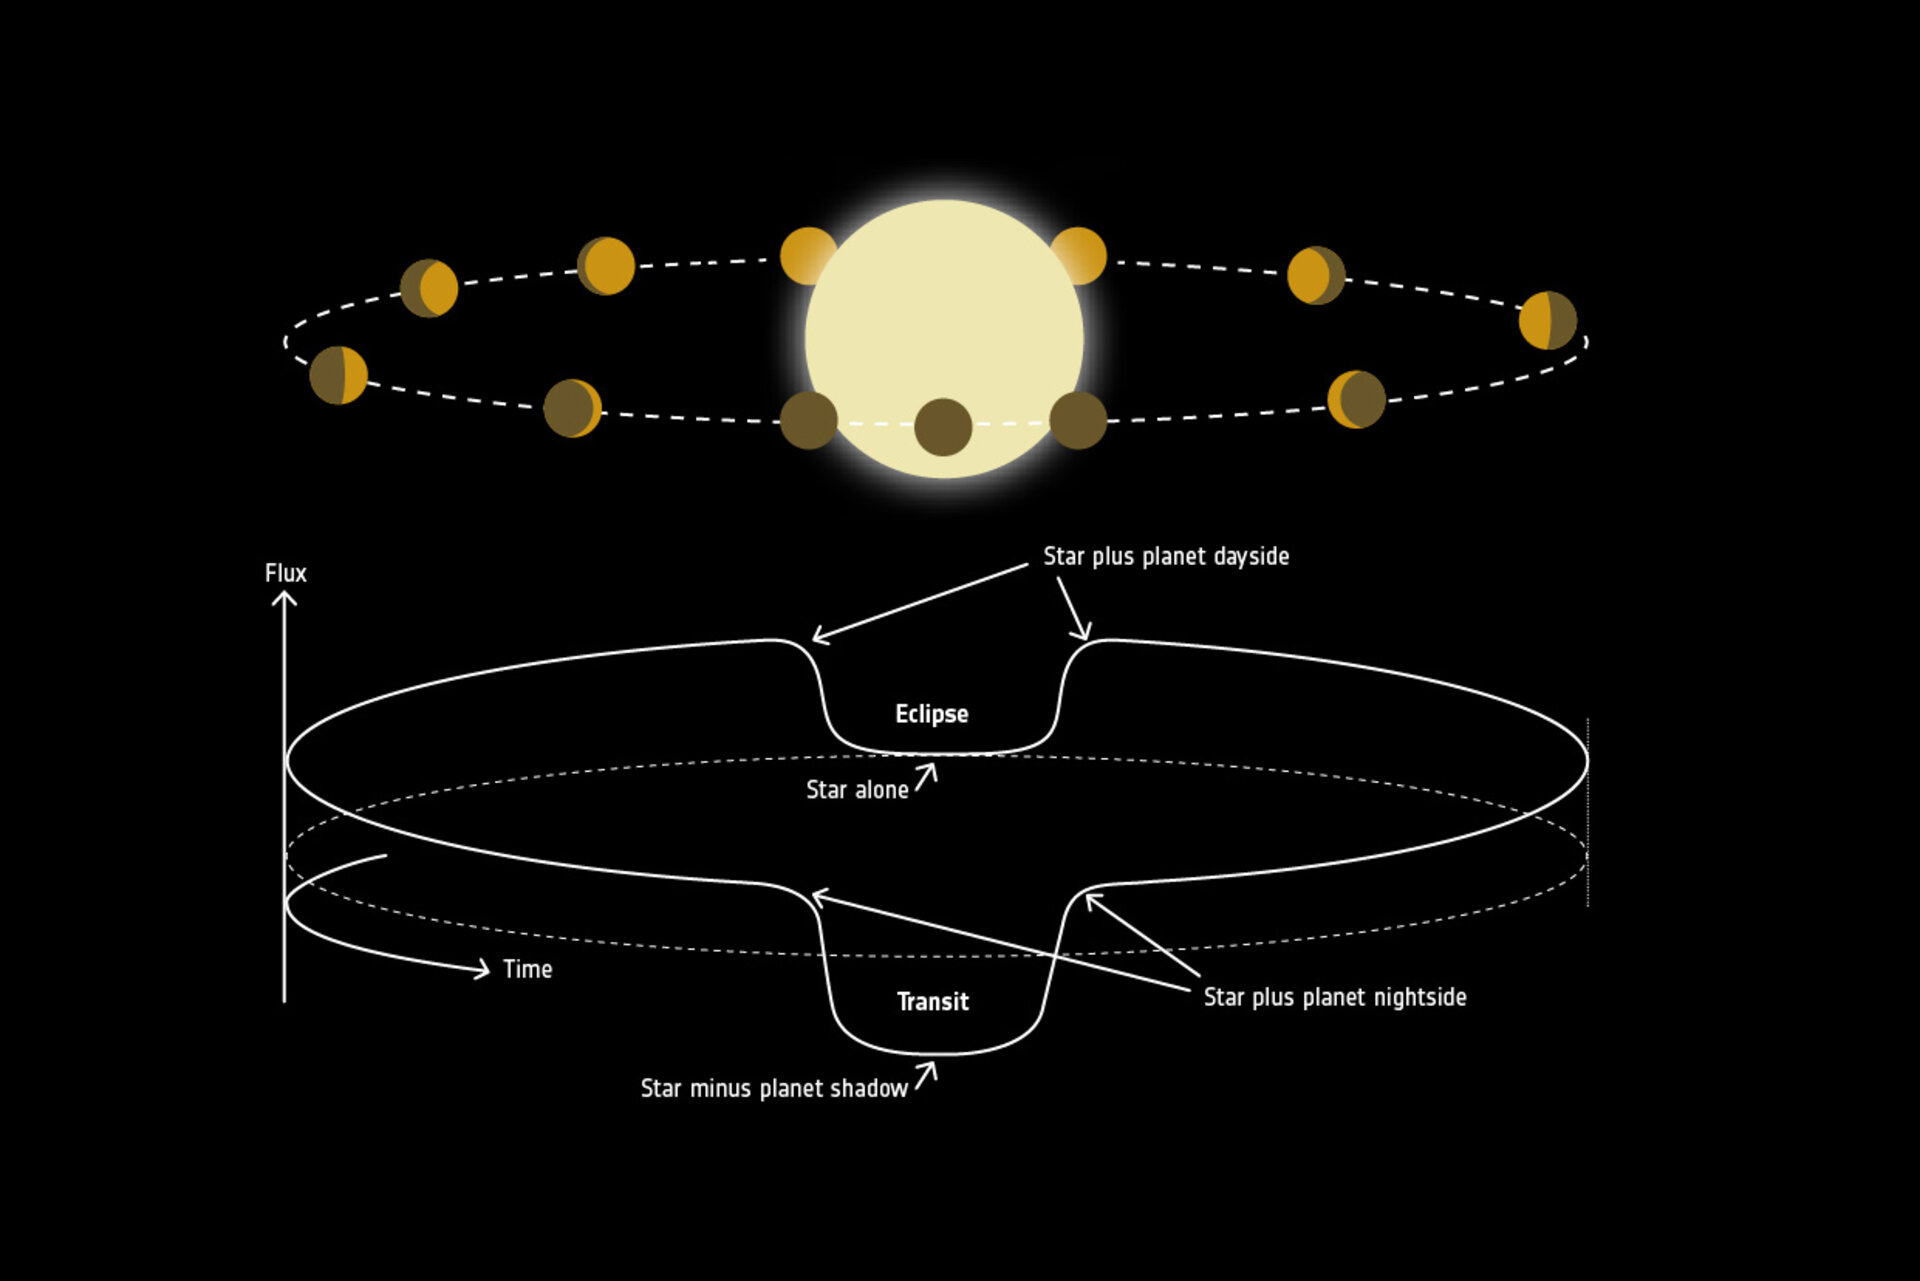 Exoplanet phase curve